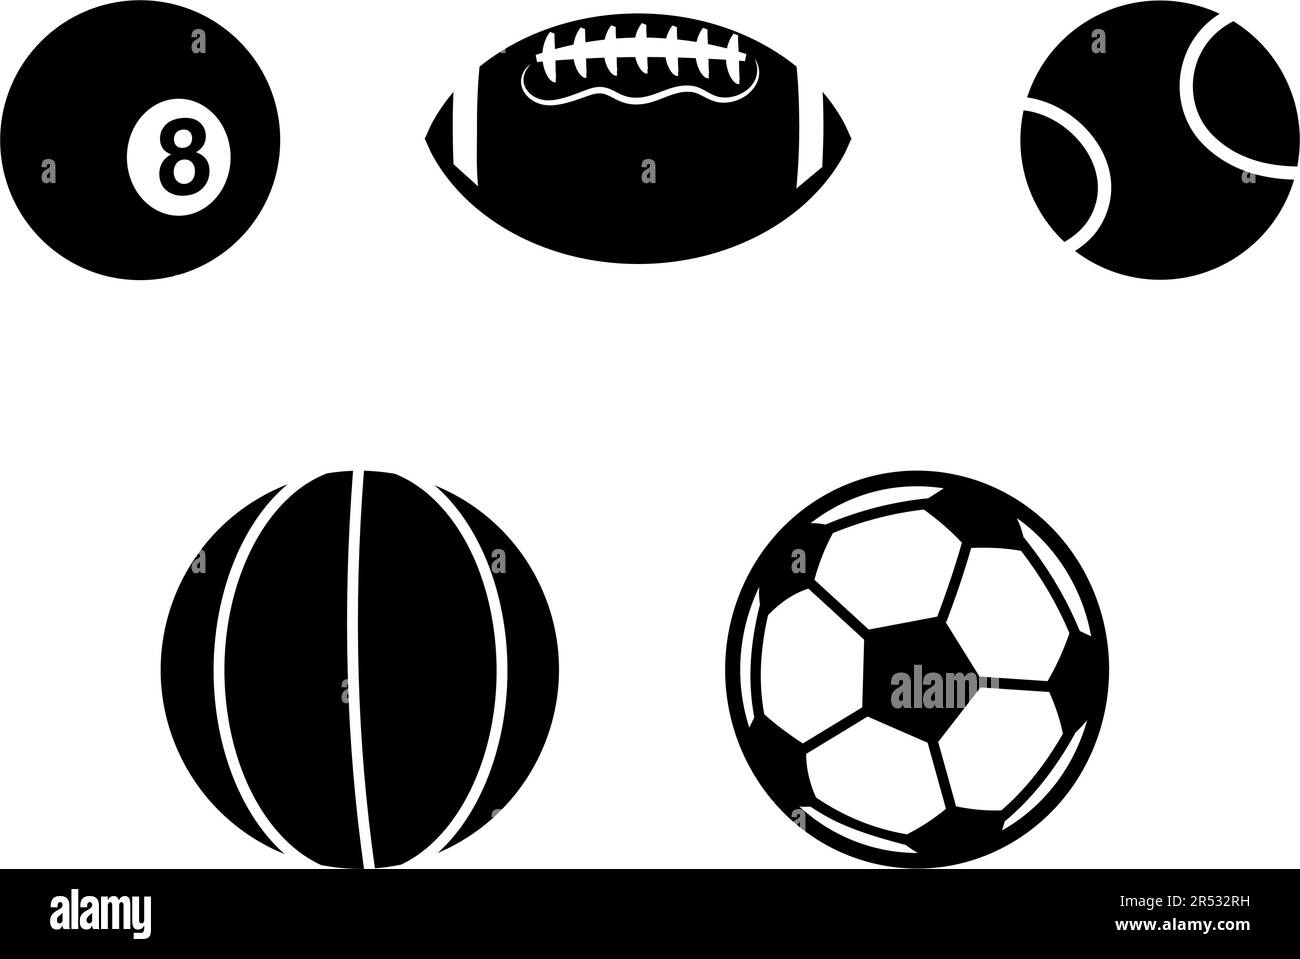 Sports ball set football, volleyball, tennis ball etc vector design illustration Stock Vector